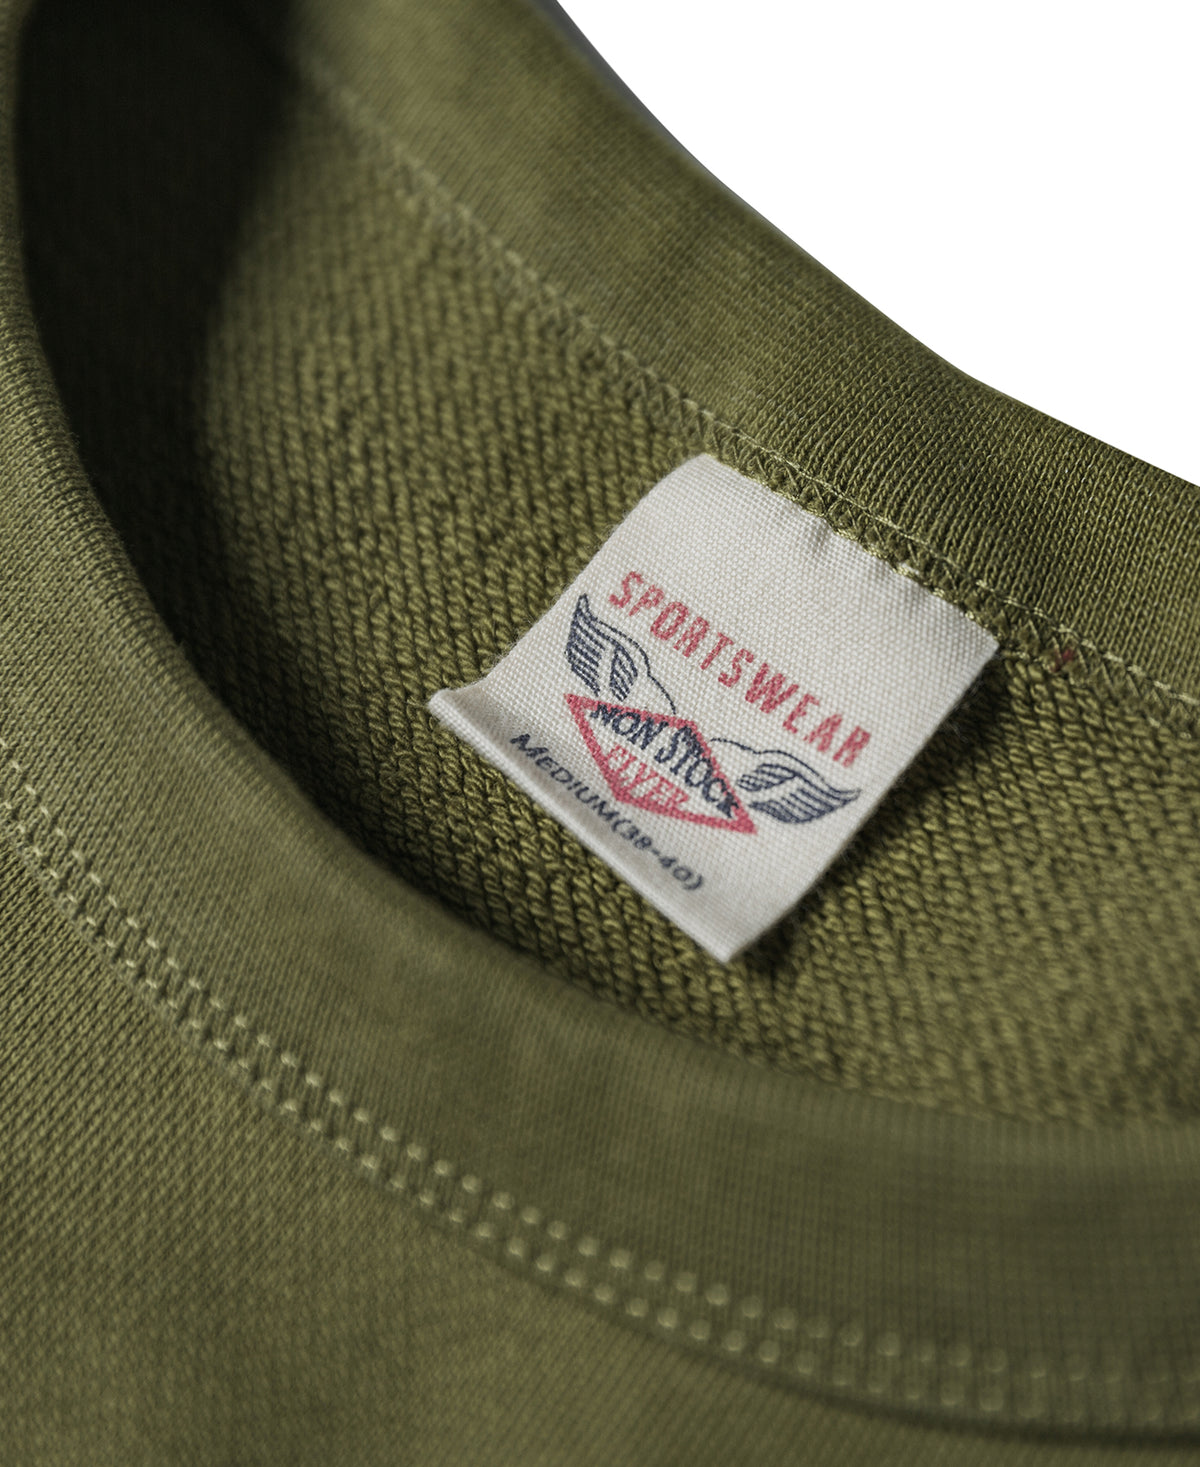 Flying Tigers Military Print Sweatshirt - Olive